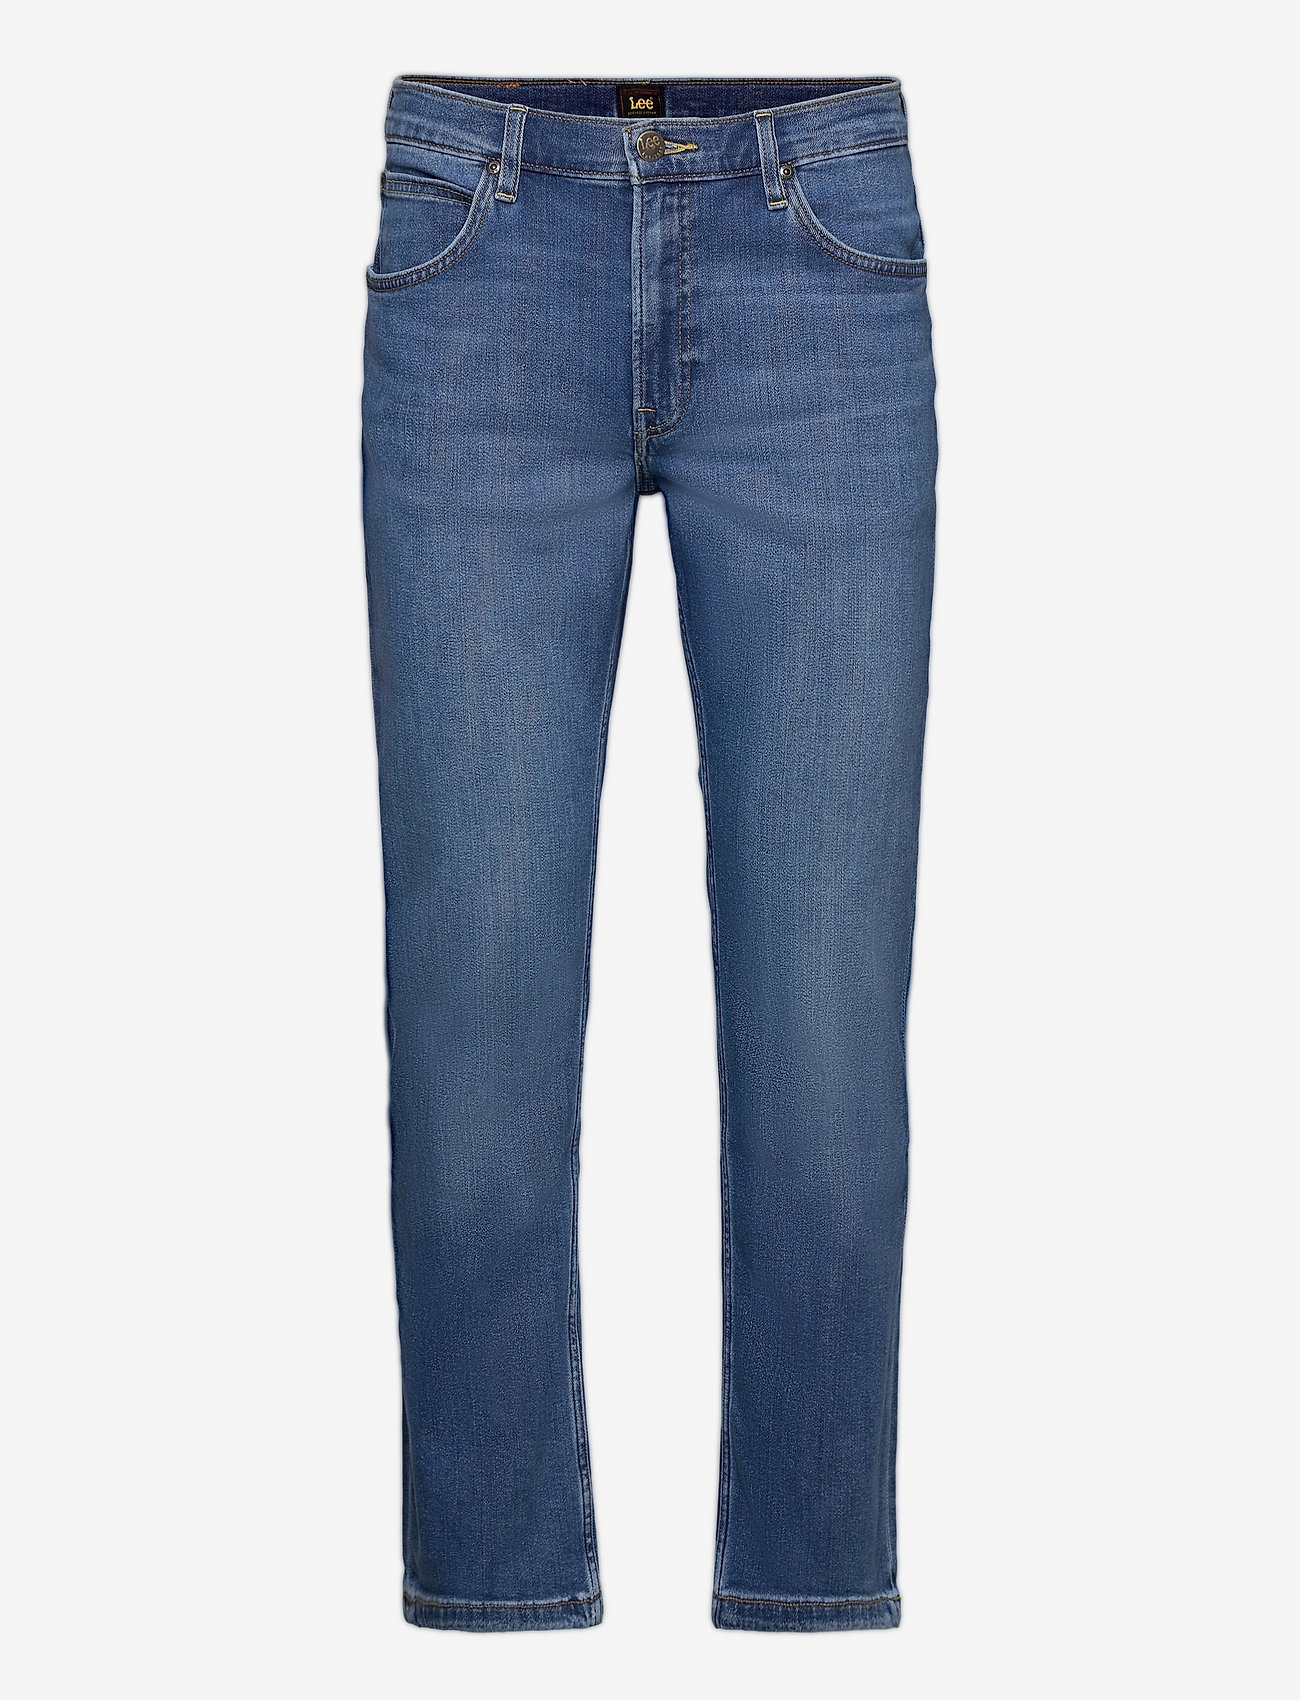 Lee Jeans - BROOKLYN STRAIGHT - regular jeans - dark nelson - 0